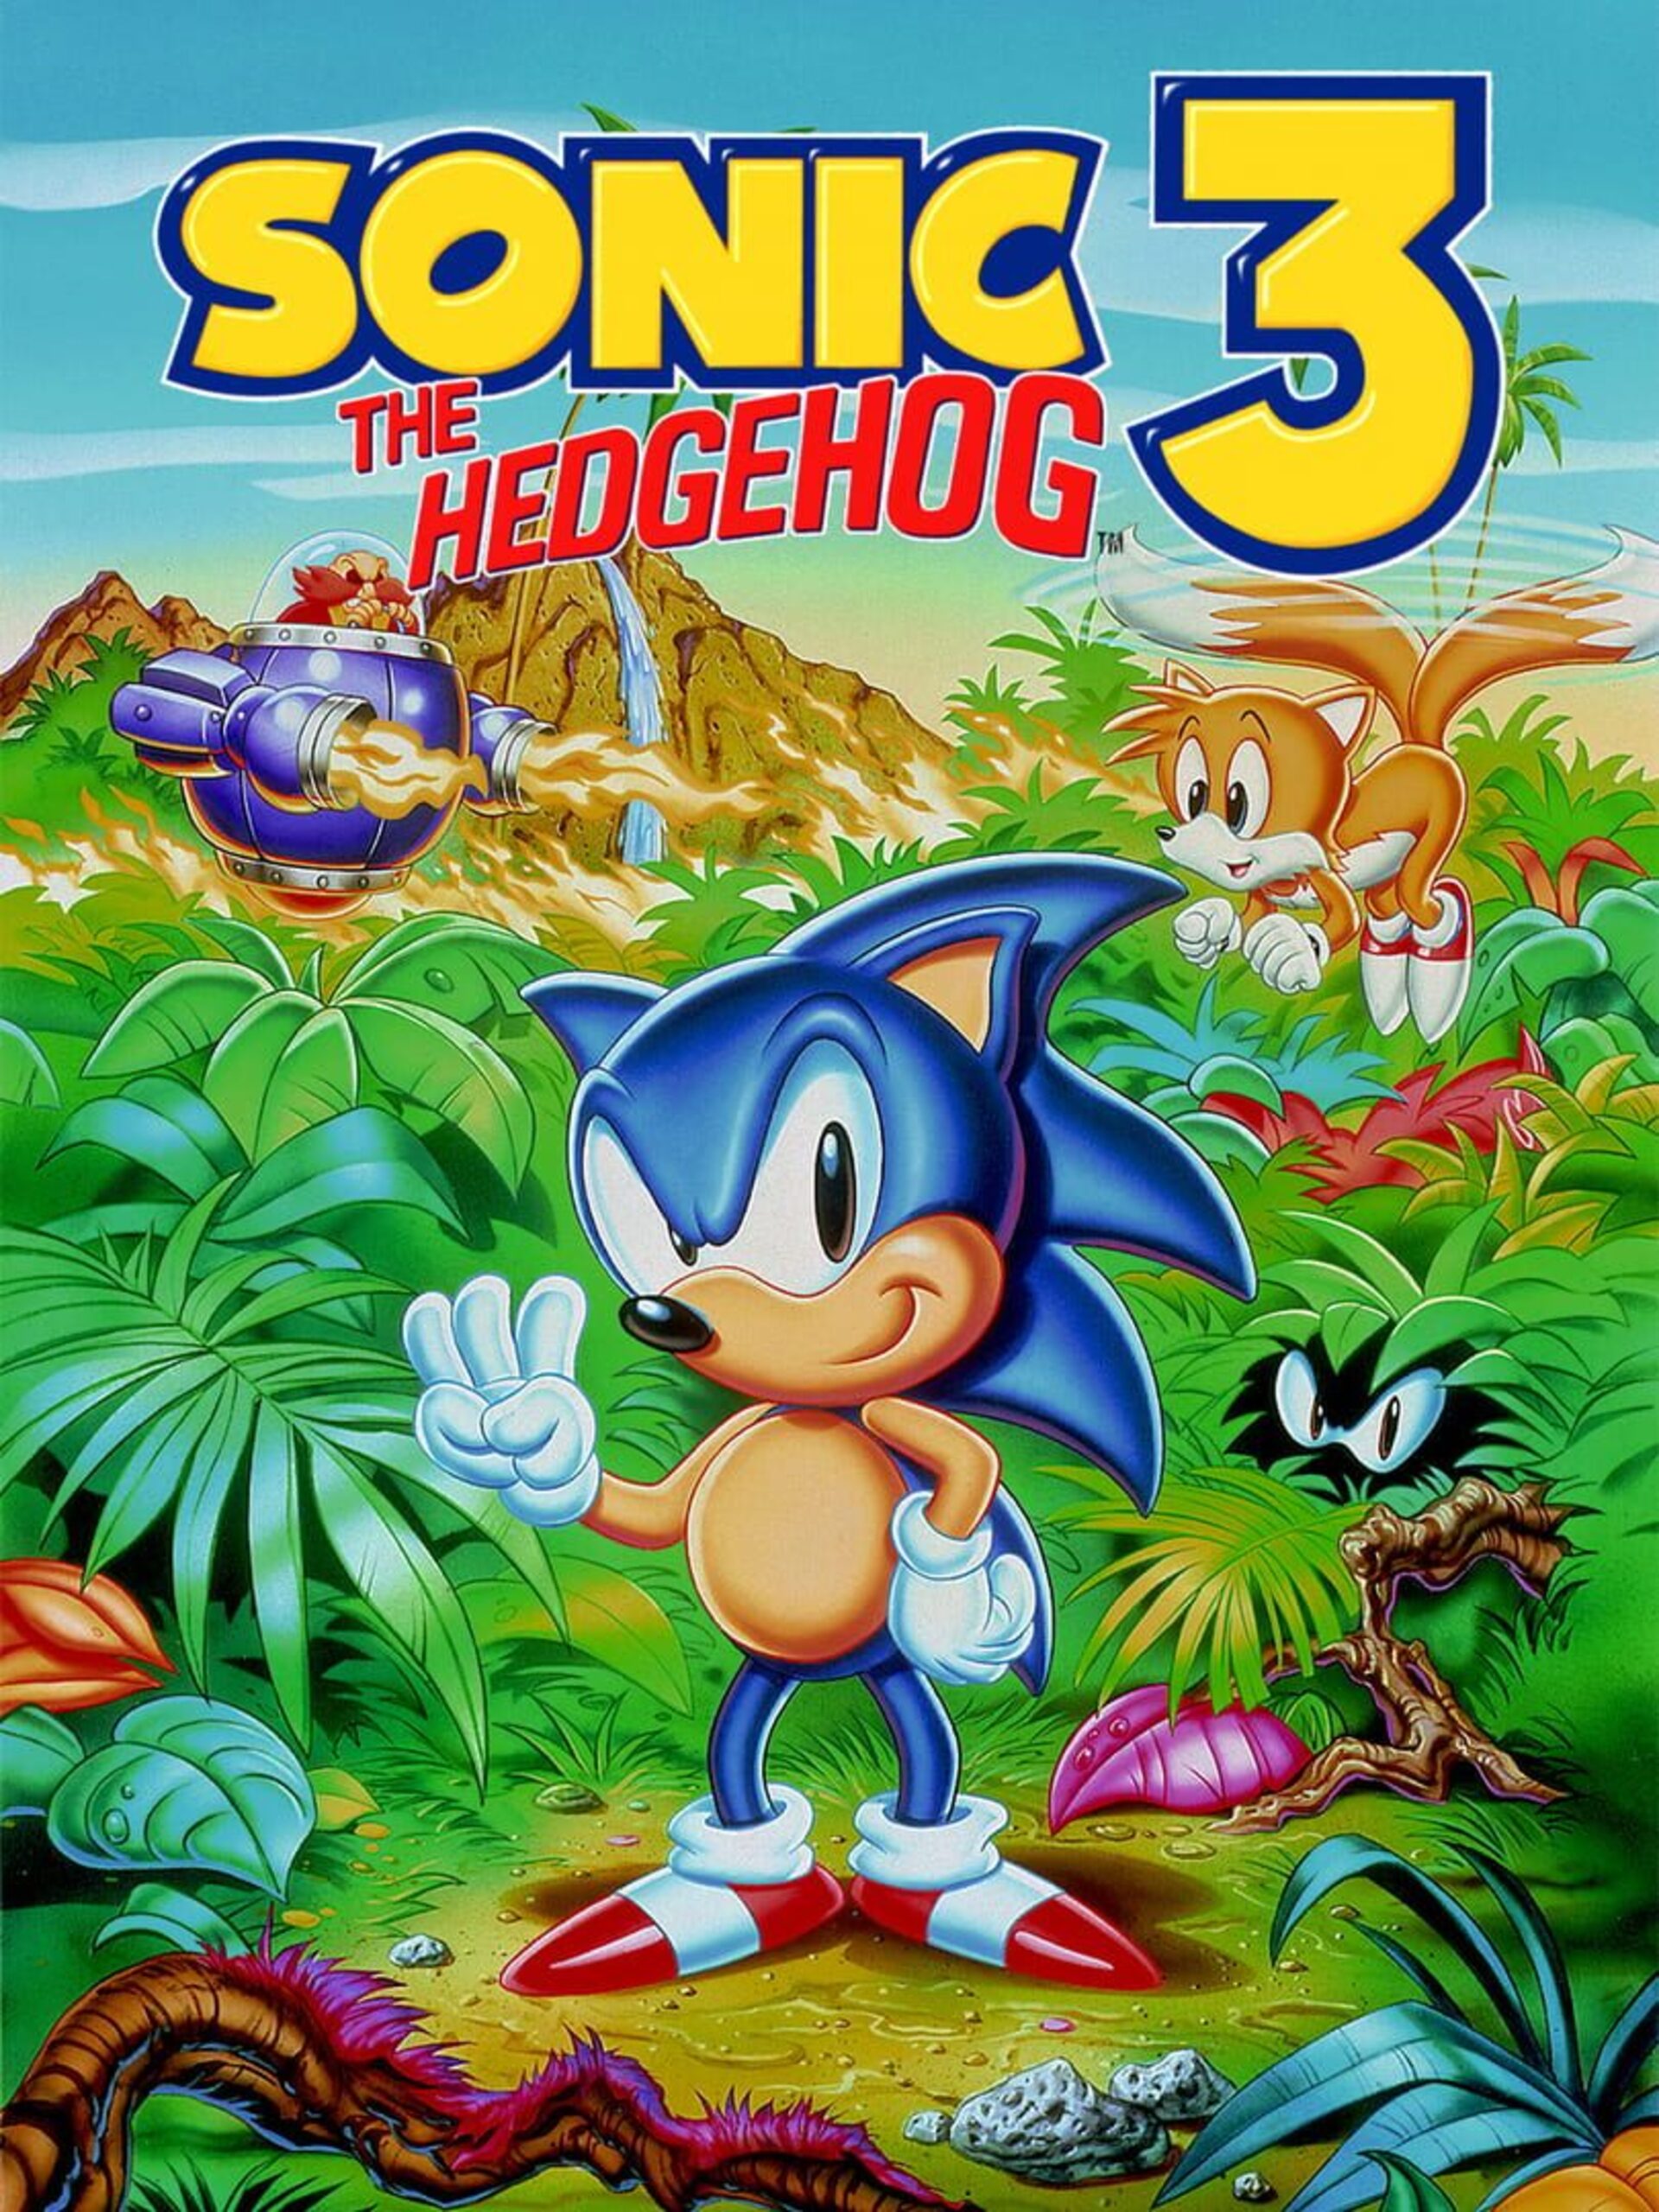 Buy Sonic the Hedgehog 3 (1994) Sega Genesis, Cheap price